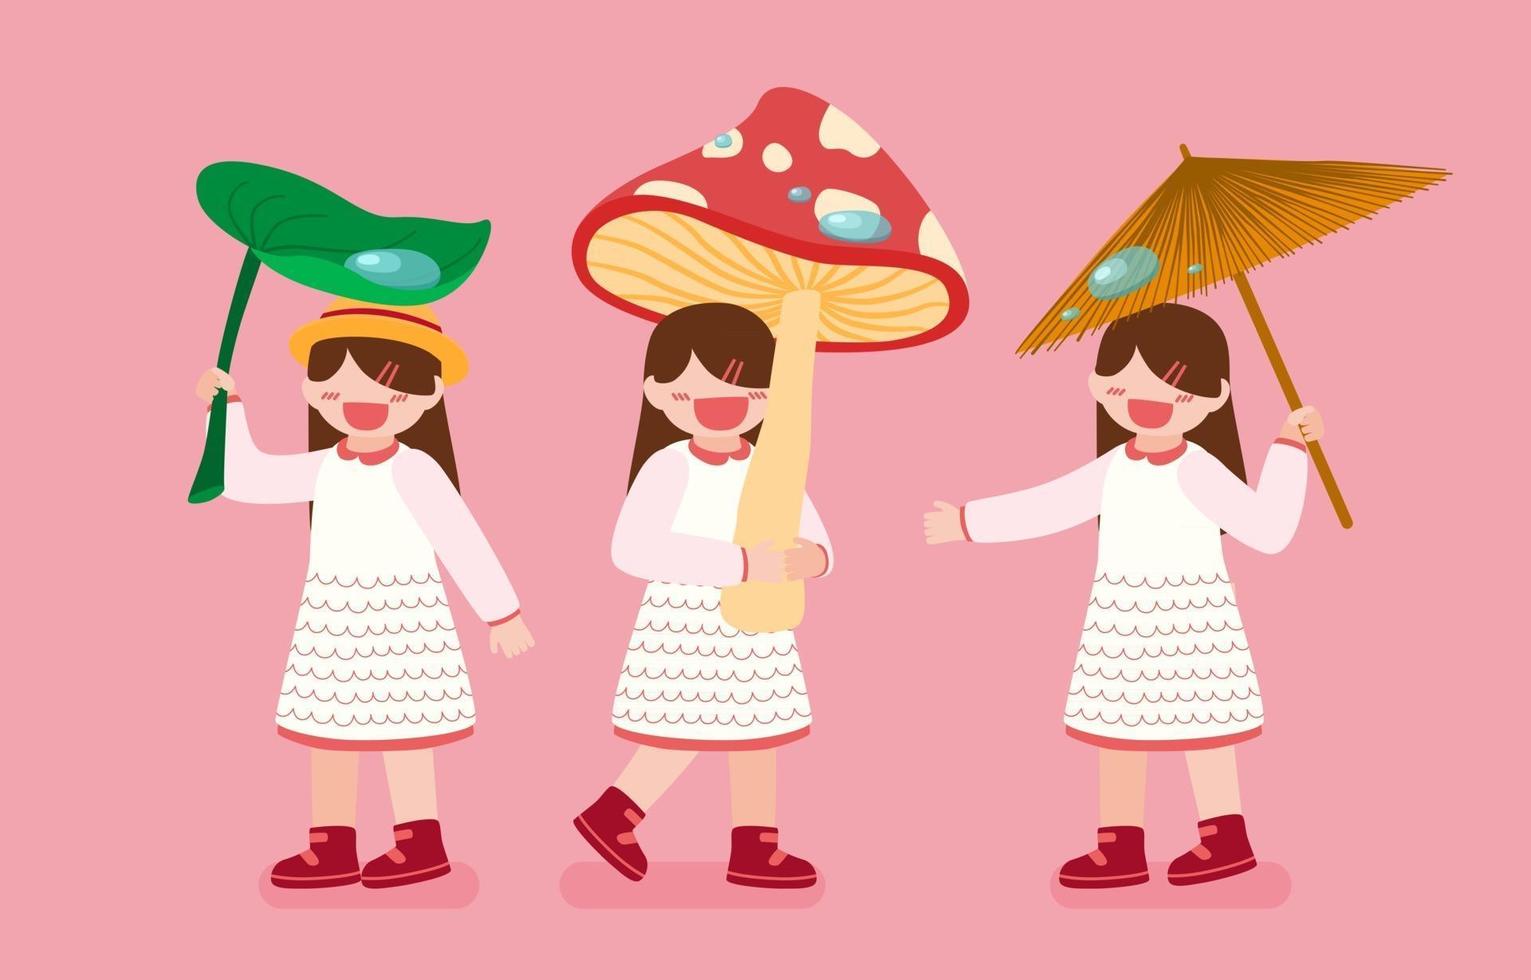 Bundle girl and umbrella in cartoon character vector